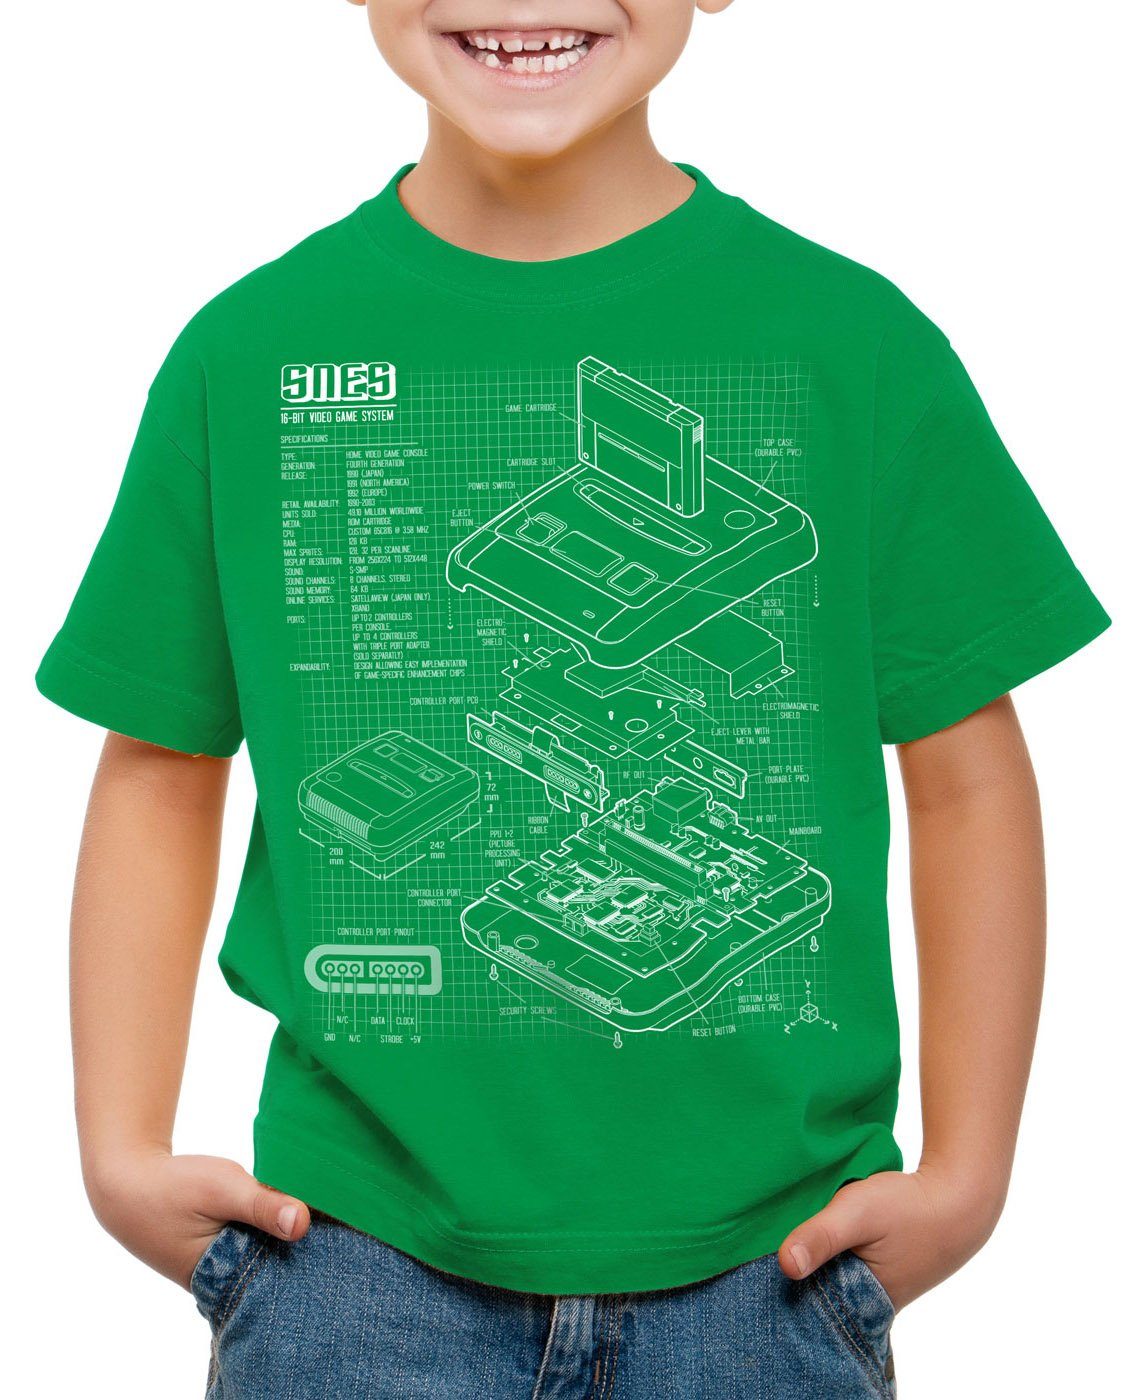 Kinder SNES Videospiel T-Shirt grün style3 Print-Shirt Blaupause 16-Bit